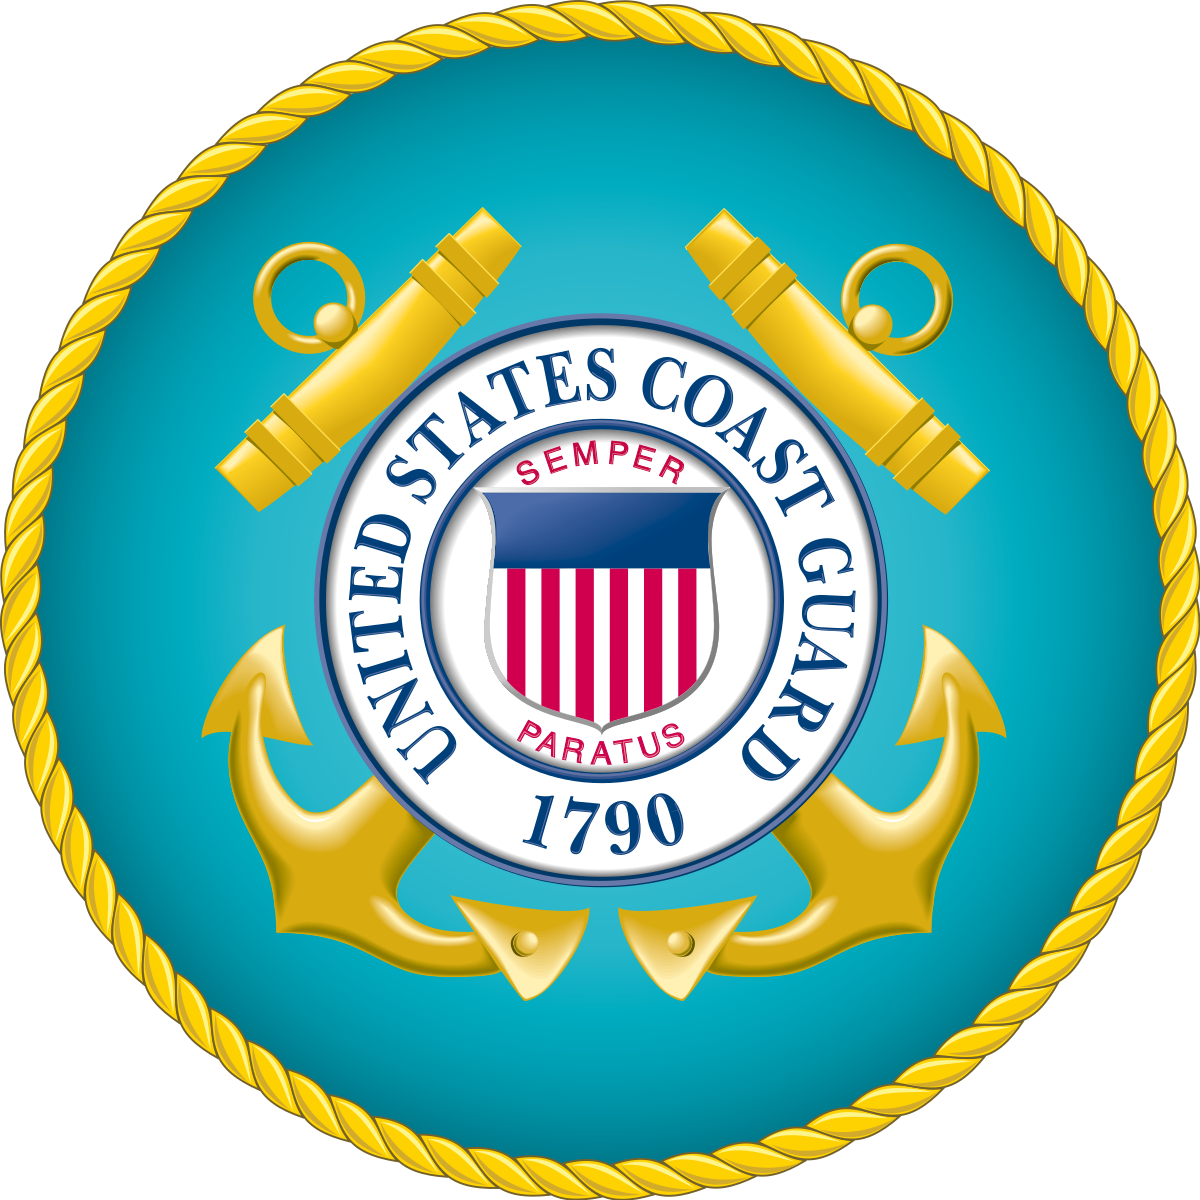 US Coast Guard seal